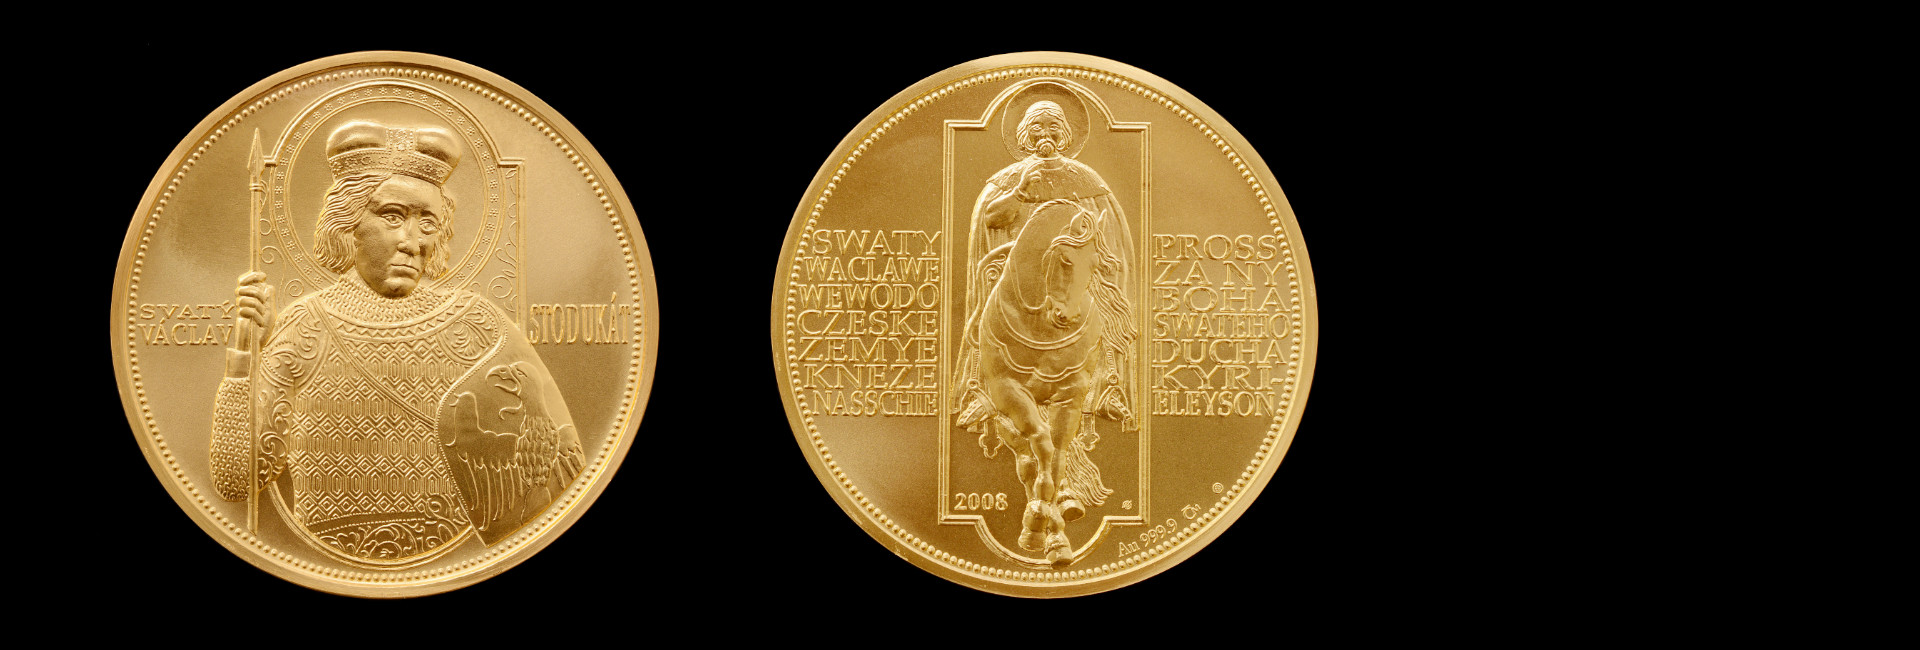 Czechia, 2008 [St. Wenceslaus 100-ducat]